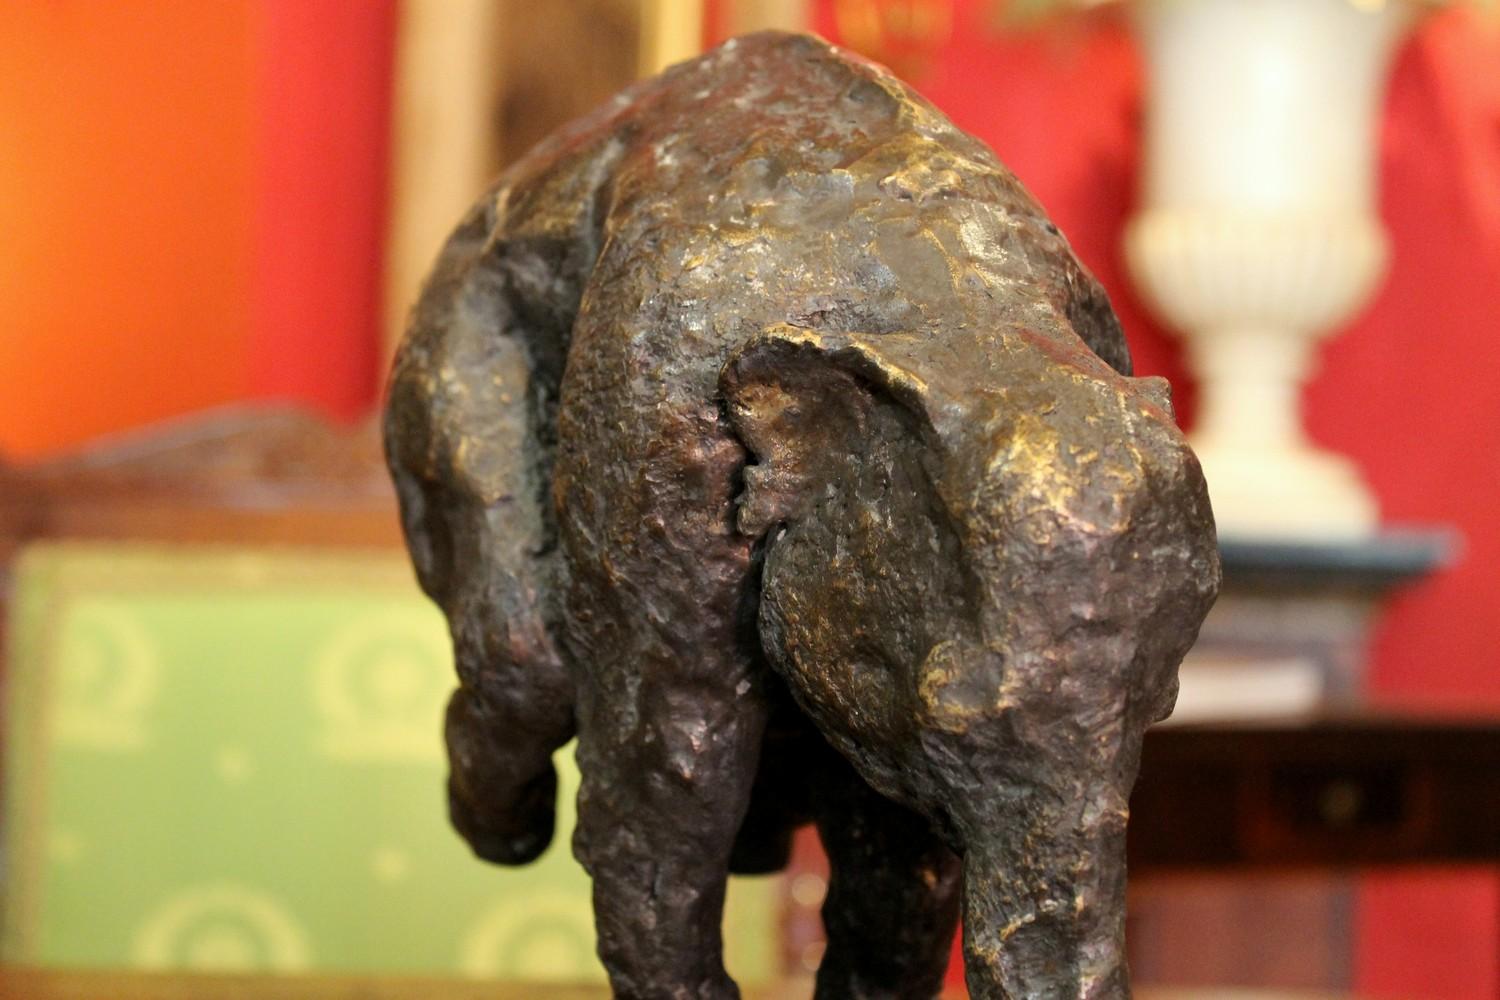 Elephant on Iron Pedestal, Lost Wax Casting Parcel-Gilt Patina Bronze Sculpture 13